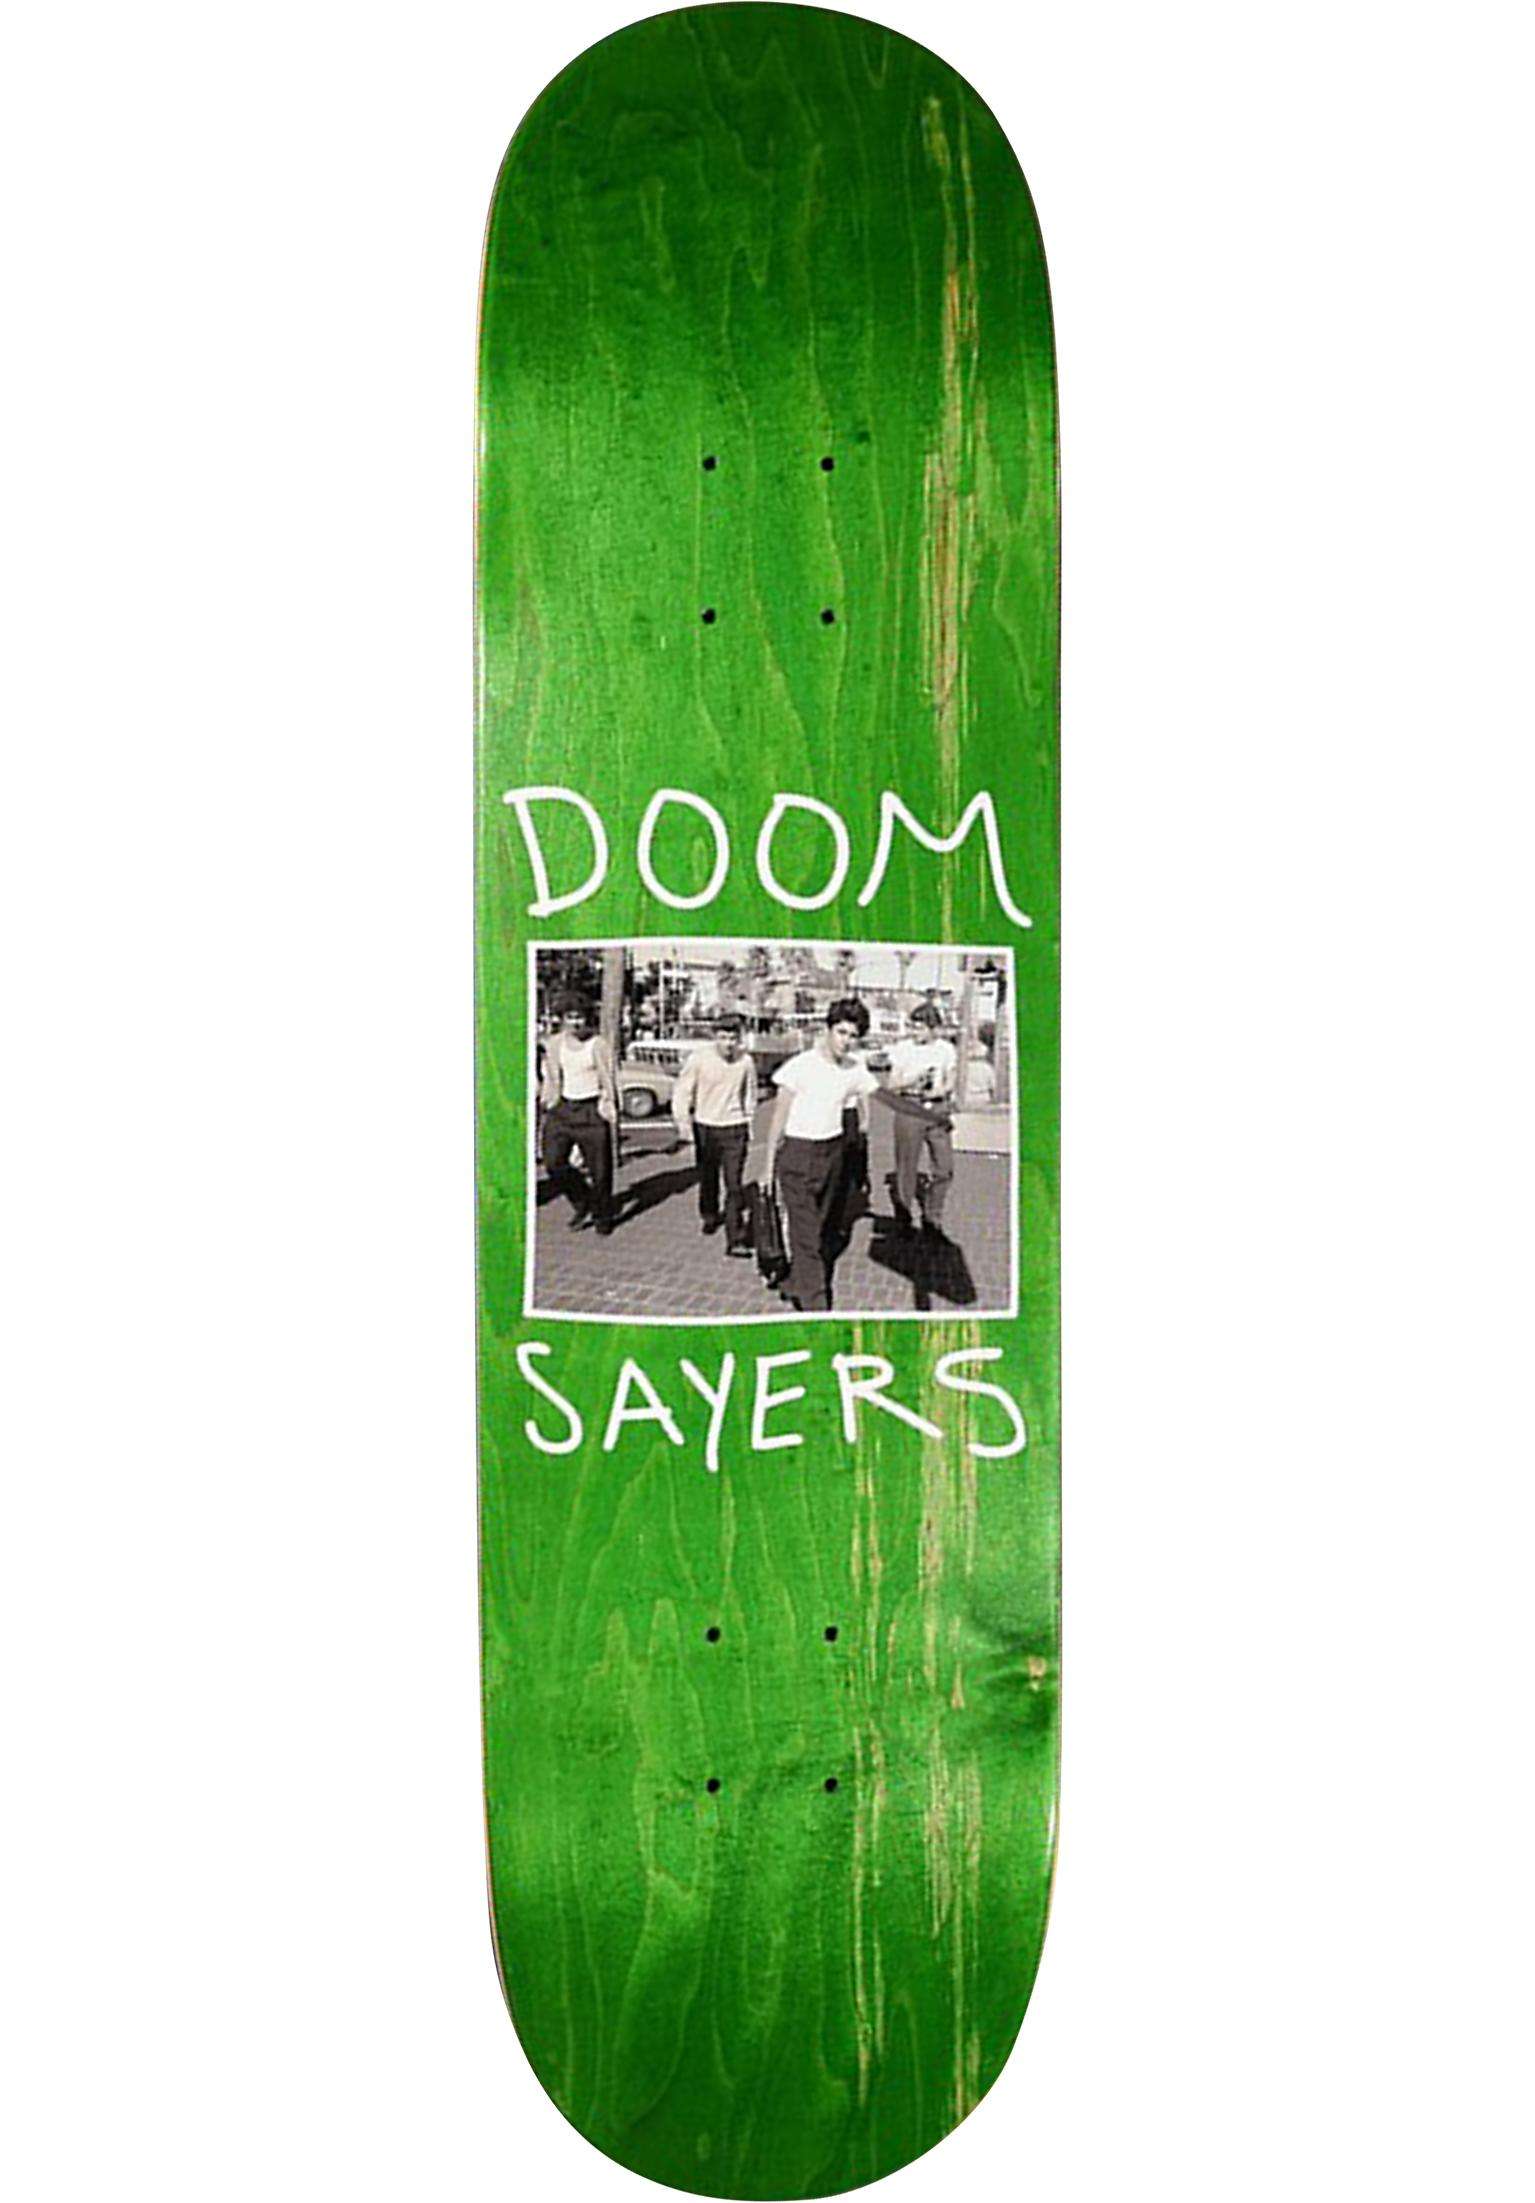 Doomsayer Skateboarding Logo - The Approach Doomsayers Skateboard Decks | Titus